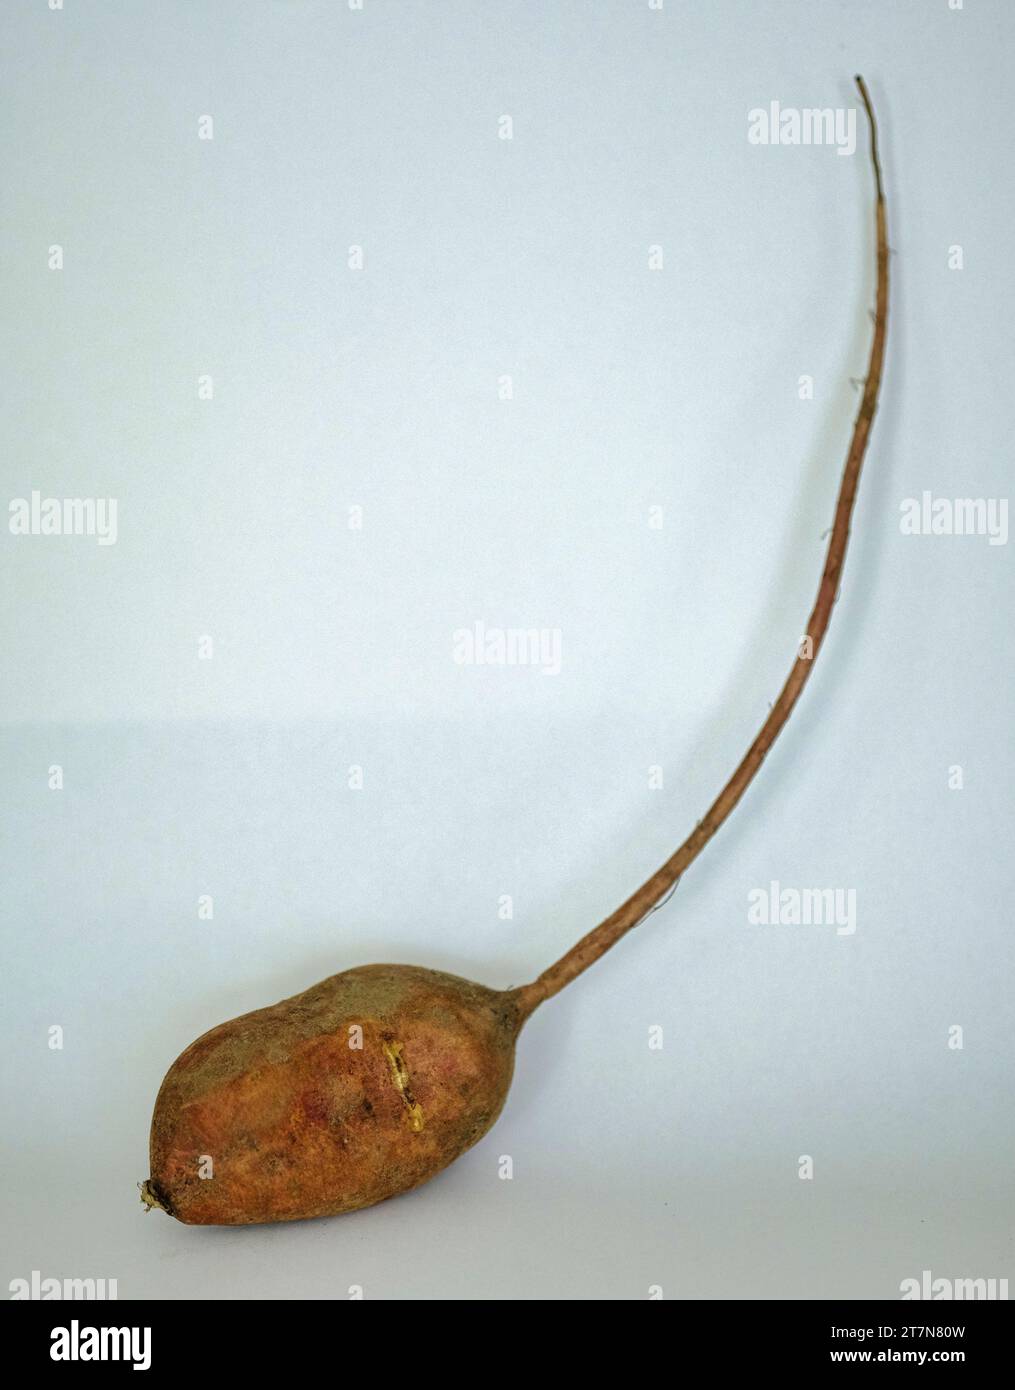 Funny vegetable shape - Sweet Potato that looks like a mouse Stock Photo